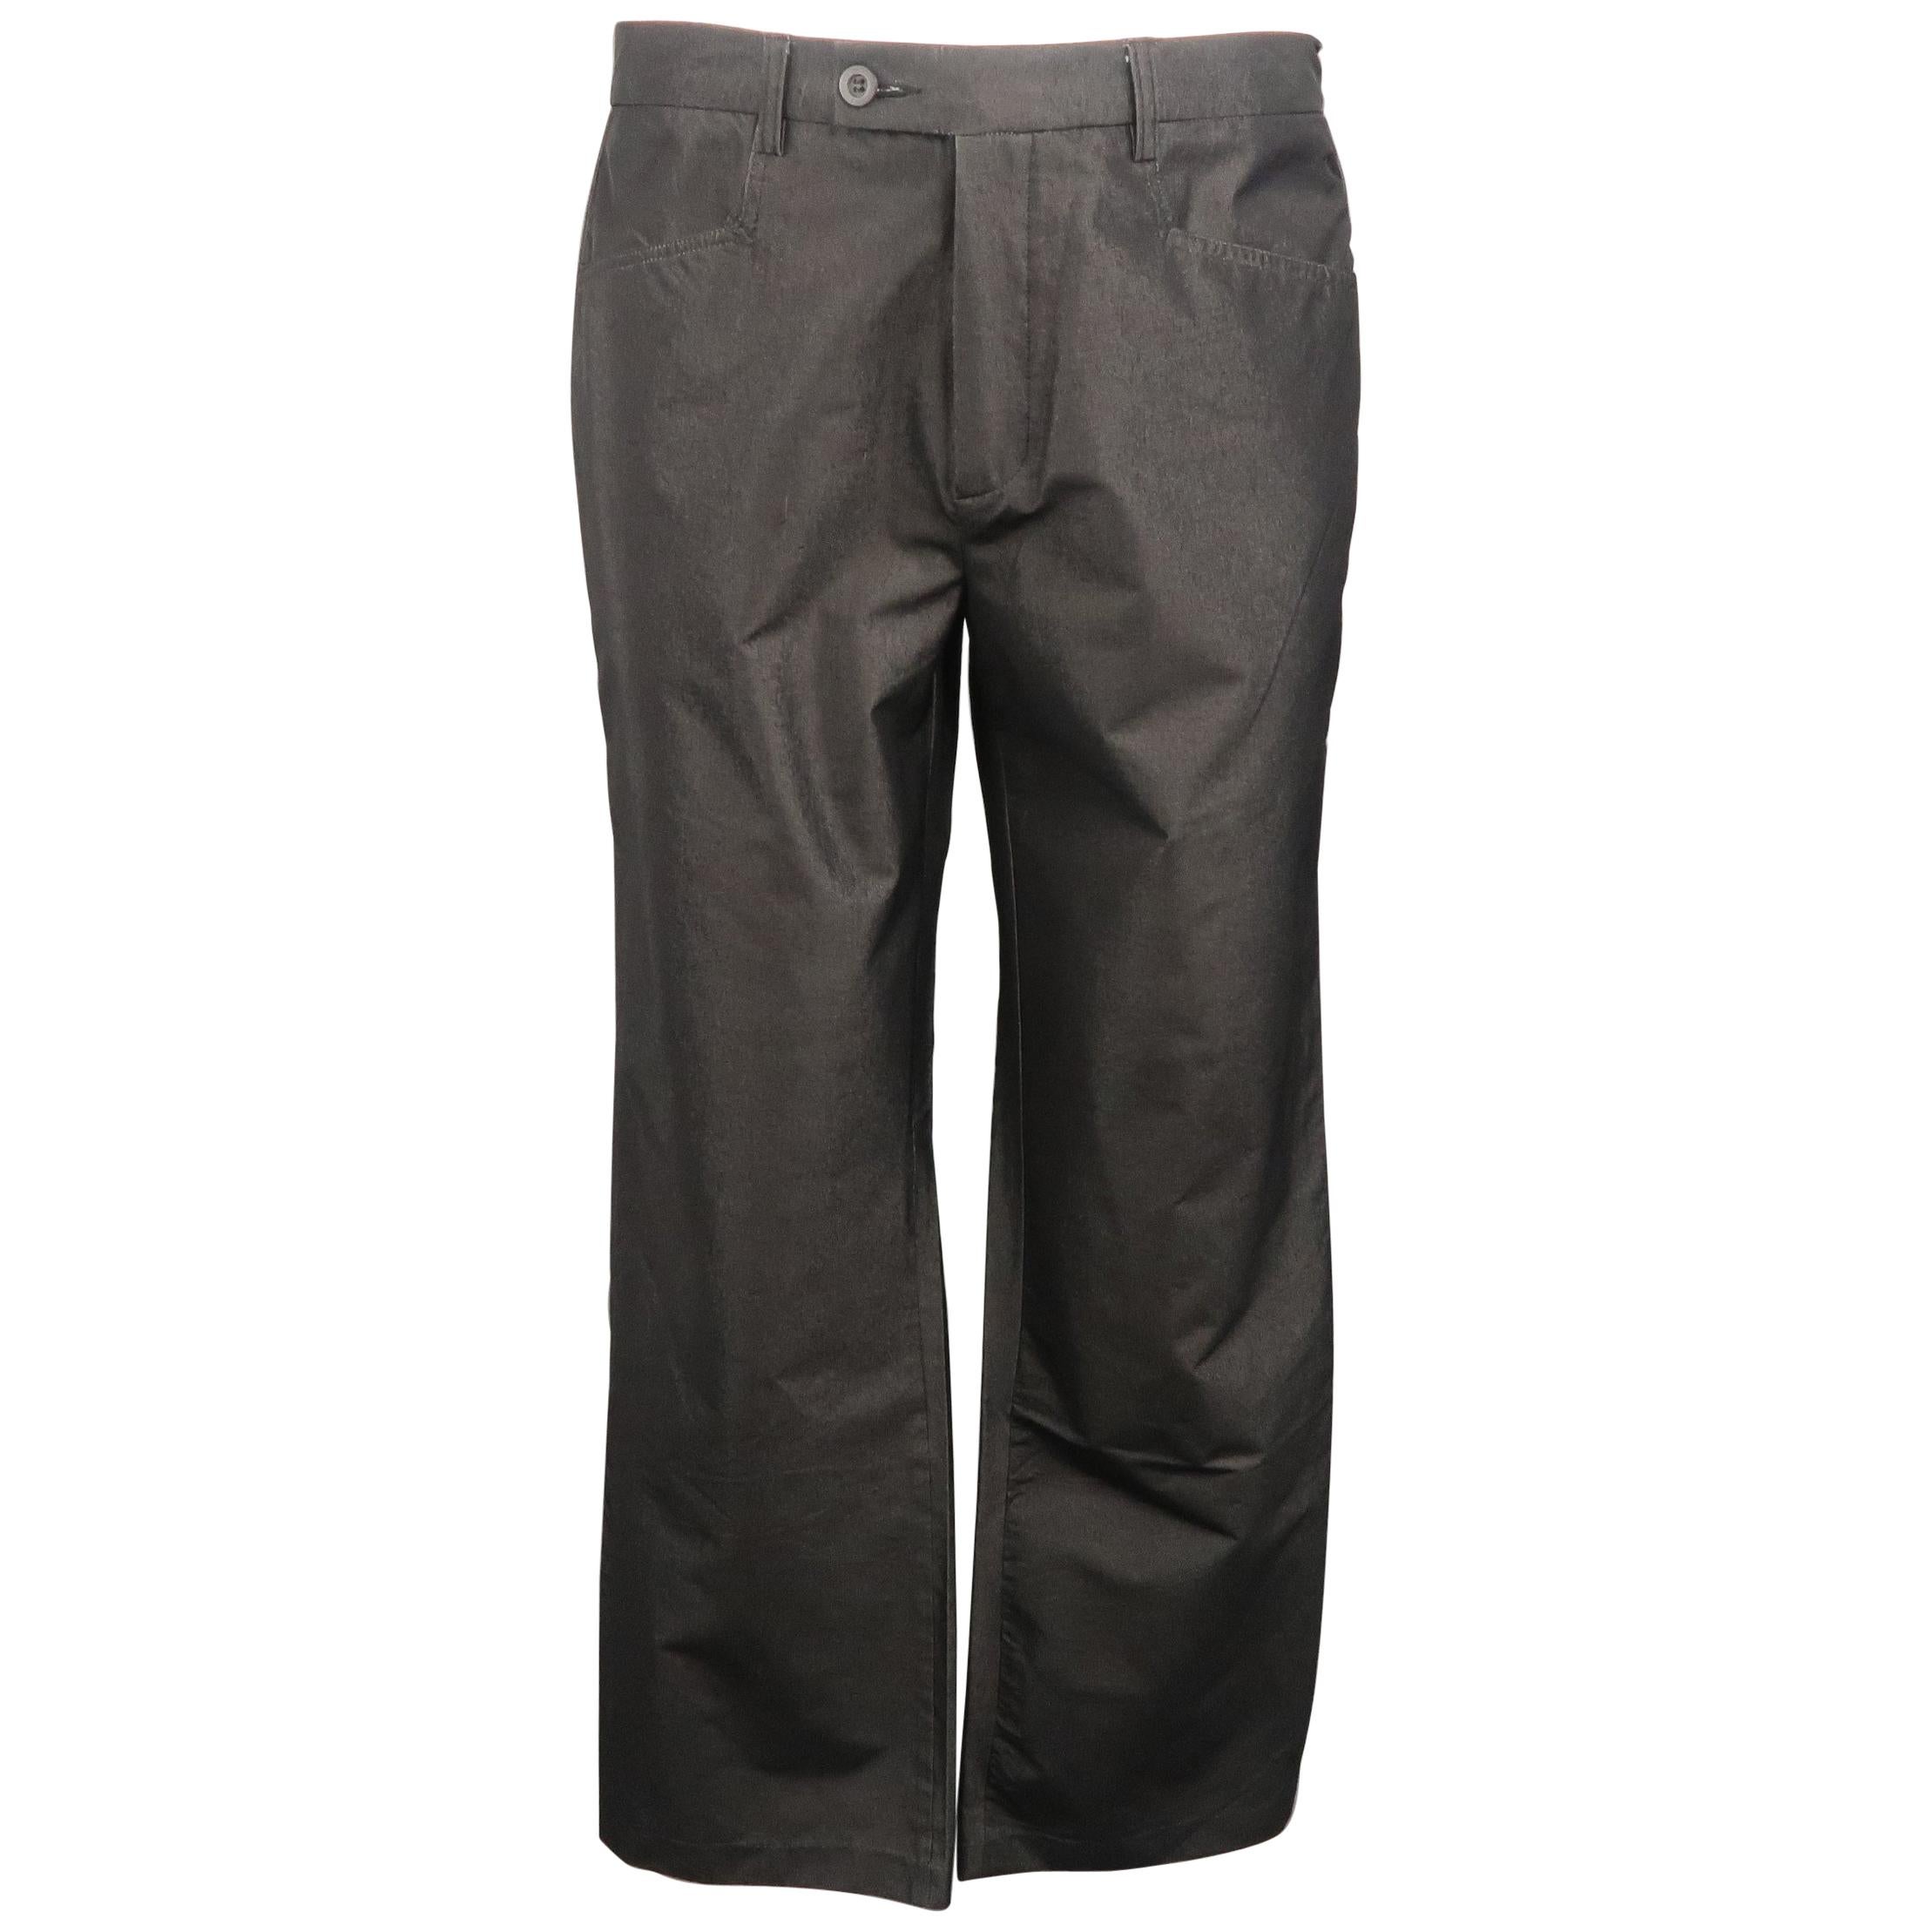 GIANNI VERSACE Size 32 Charcoal Metallic Cotton Blend Casual Pants